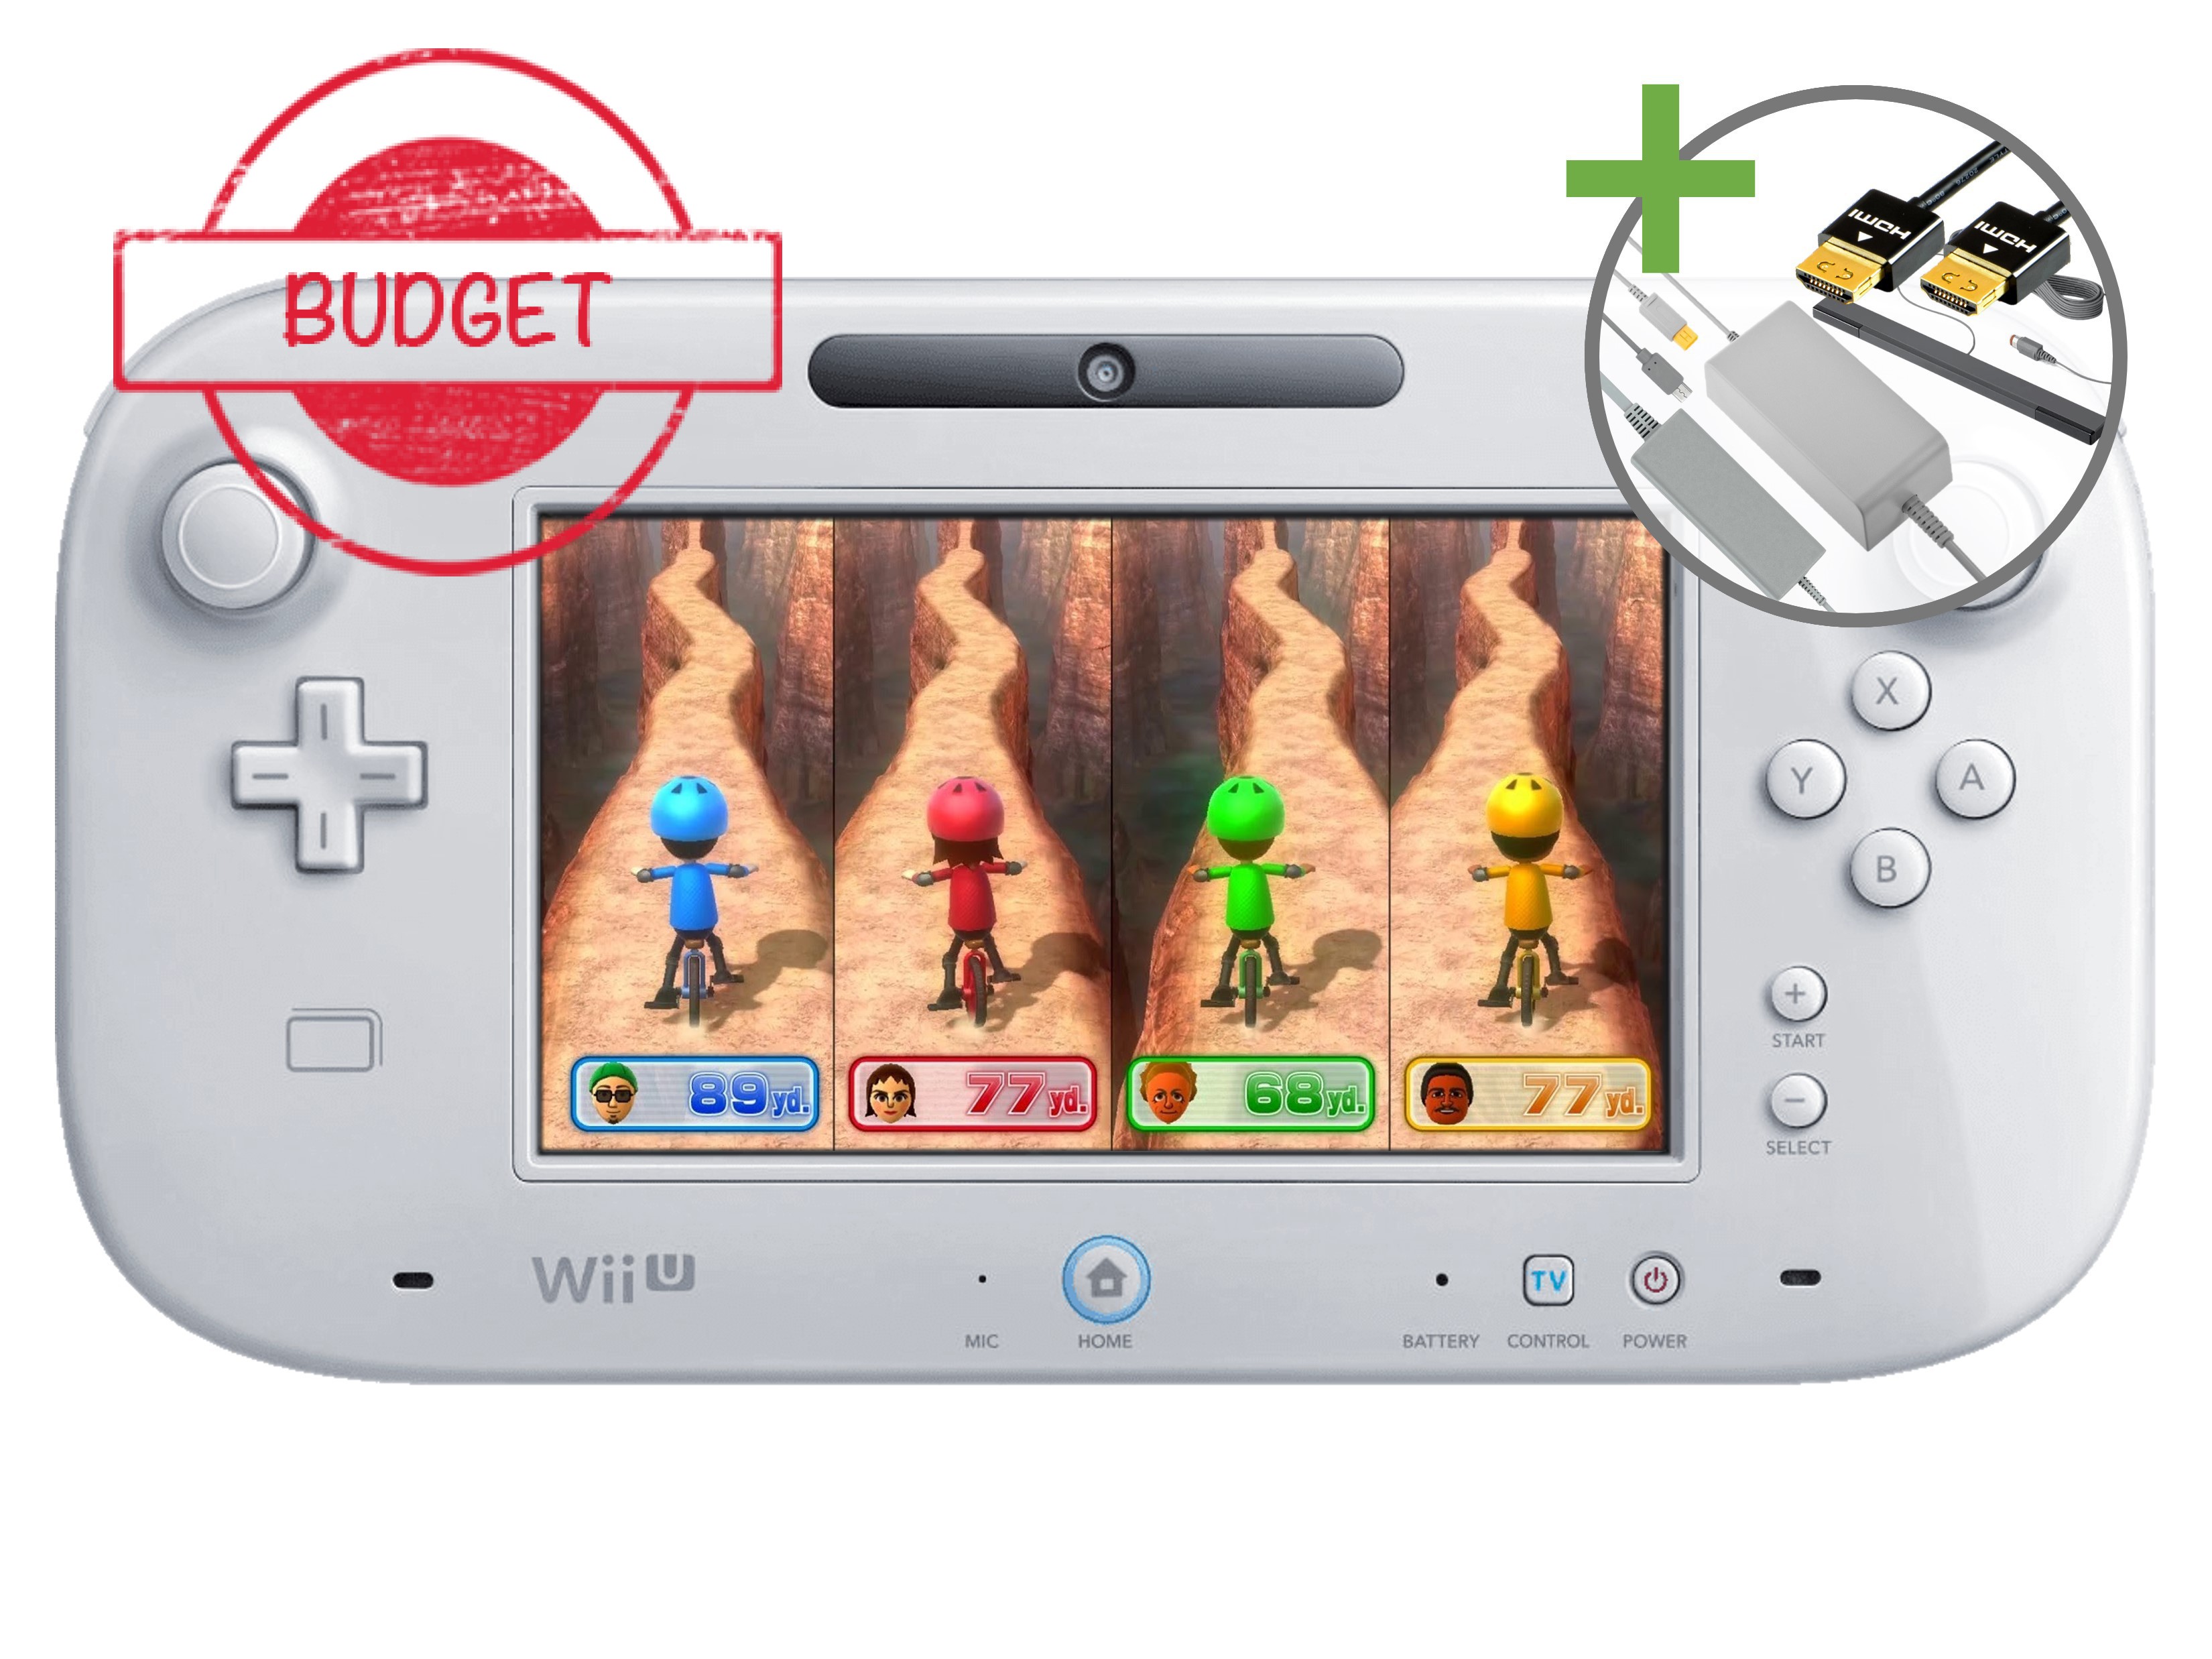 Nintendo Wii U Starter Pack - Wii Party U Edition - Budget - Wii U Hardware - 2